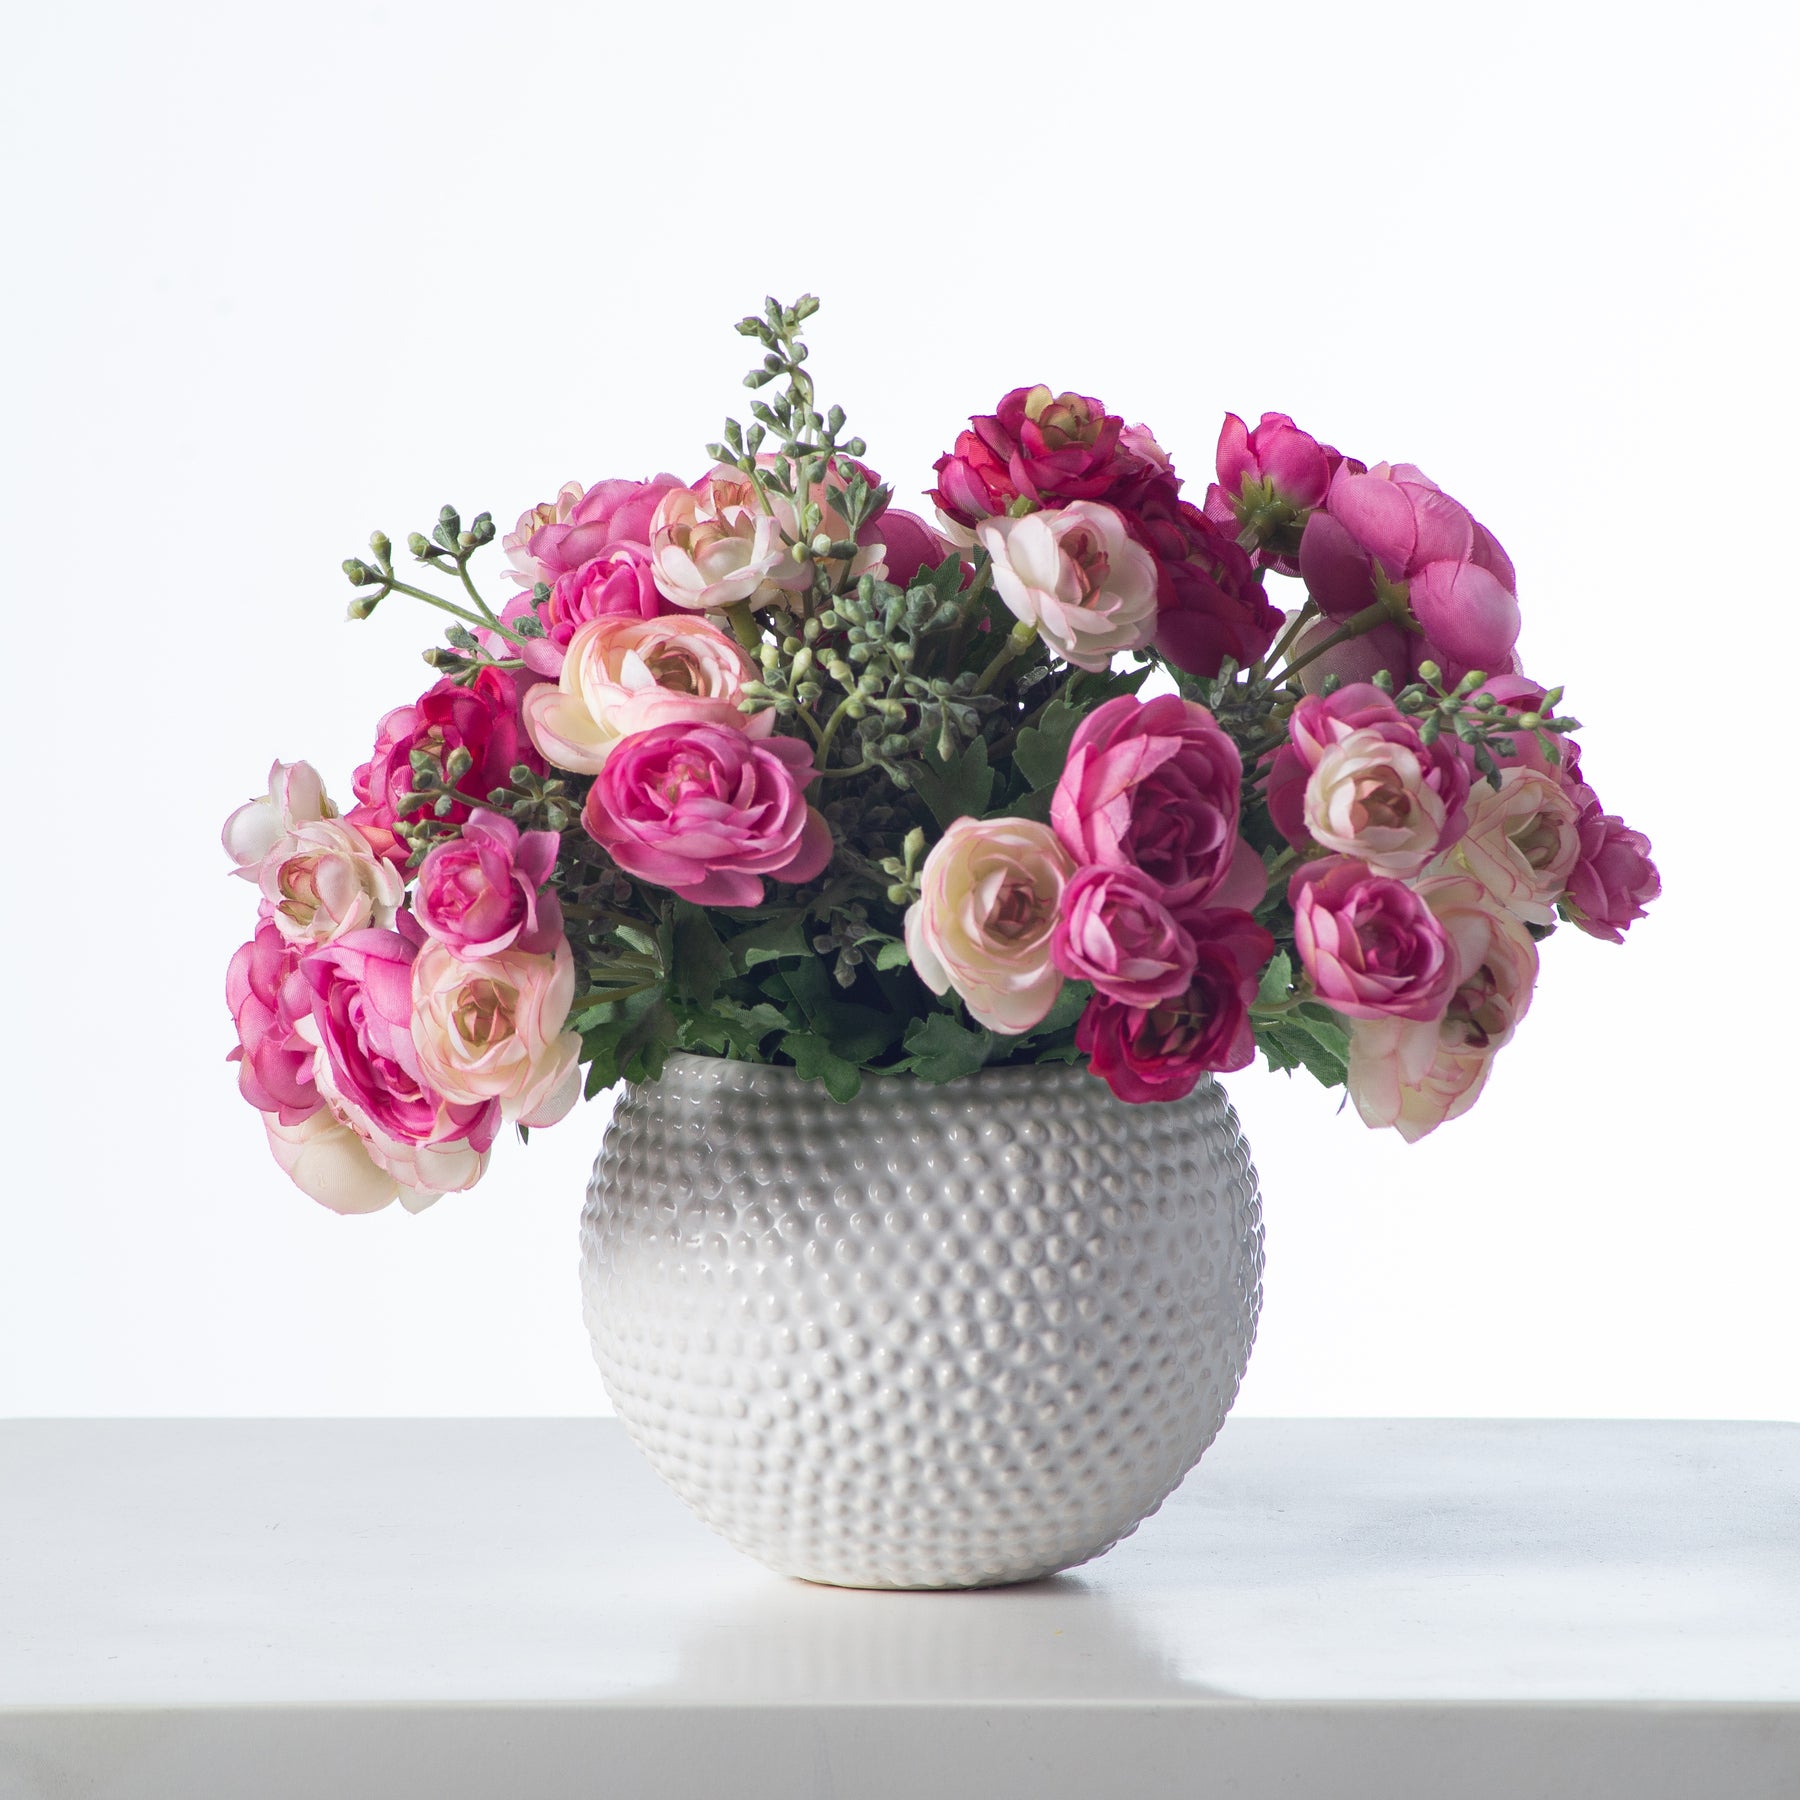 Roses, Ranunculus and Pink Cymbidium - Empty Vase Floral Arrangement